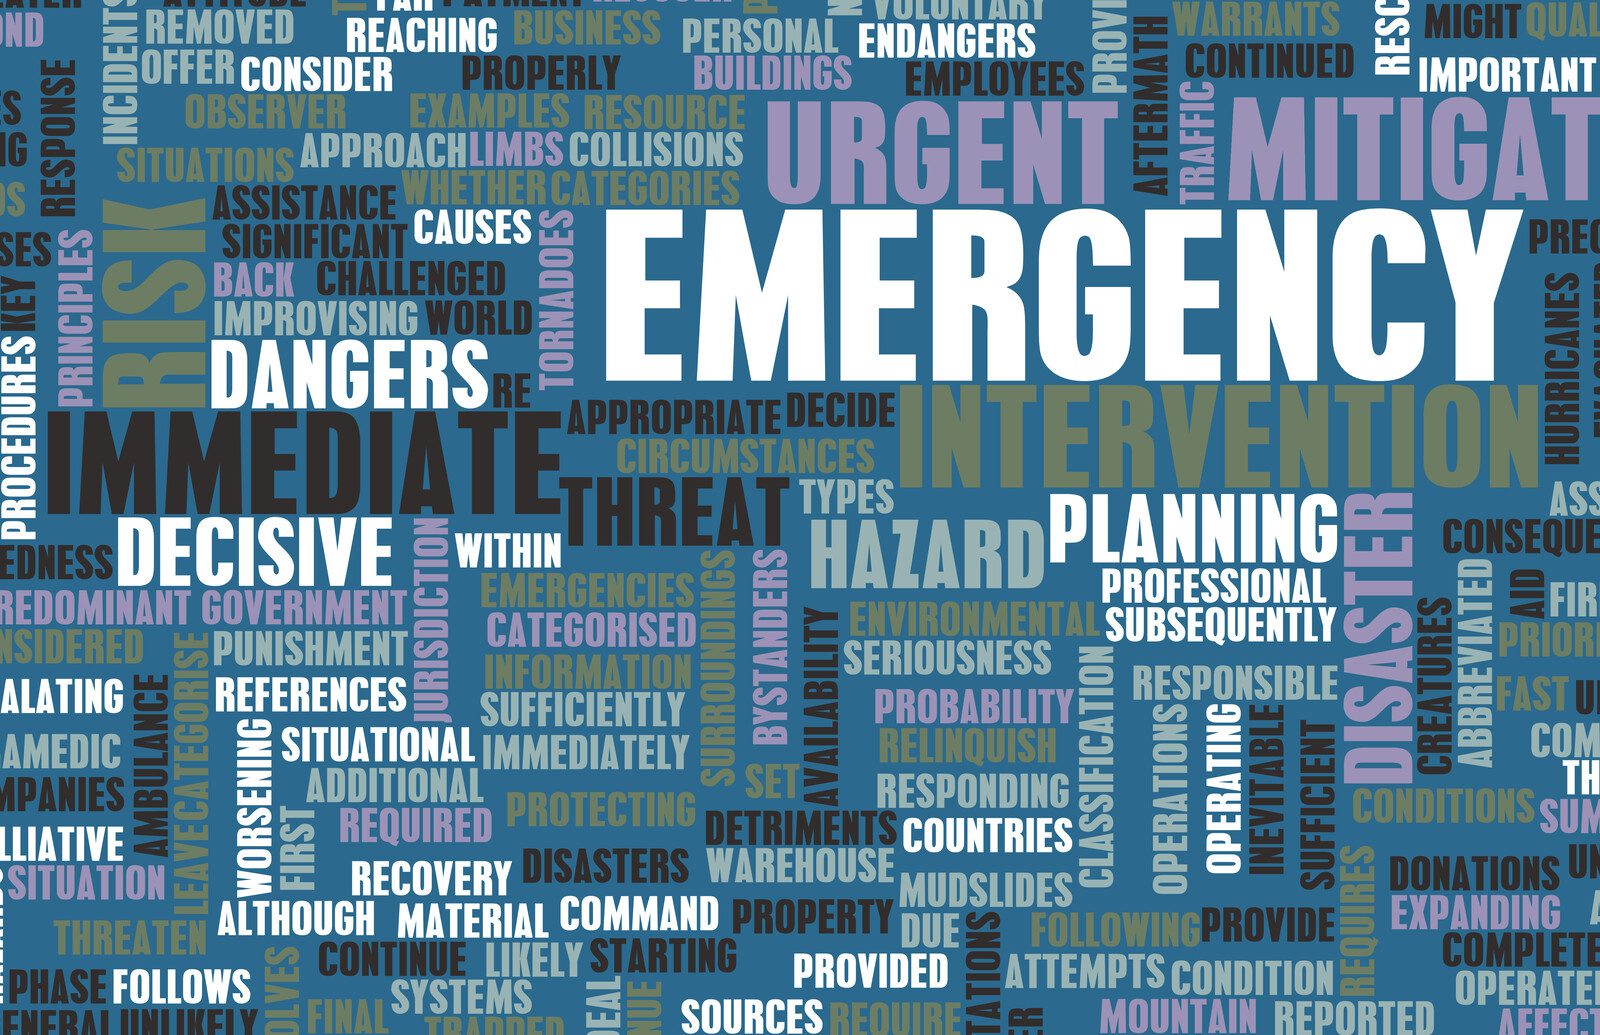 ALL-ISLAND INITIATIVE PROMOTES CROSS-BORDER EMERGENCY MANAGEMENT